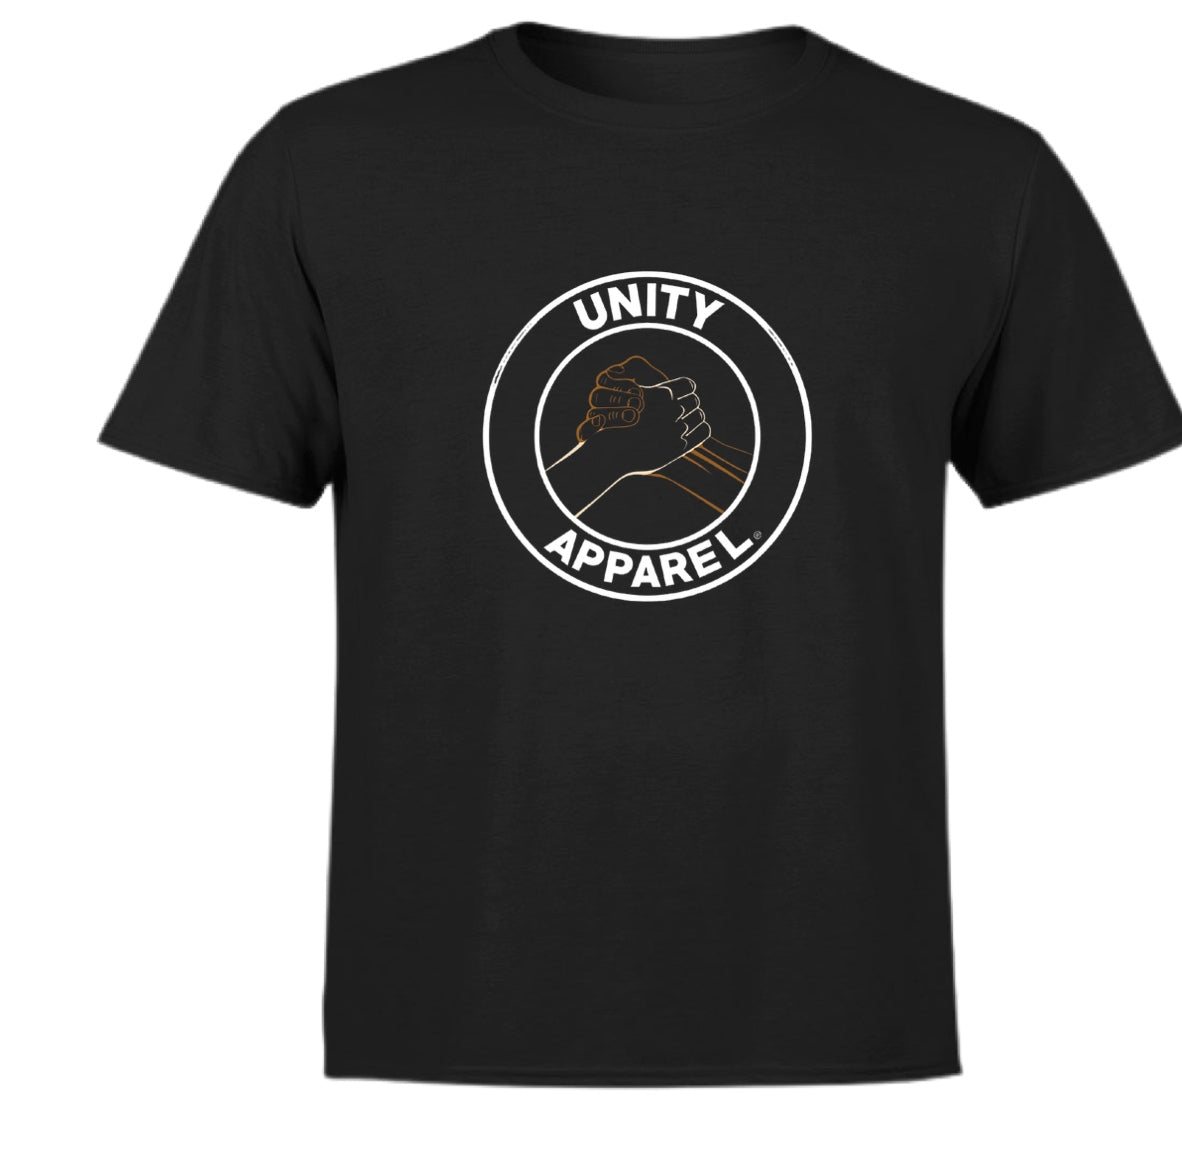 Black T Shirt With Unity Apparel Circle